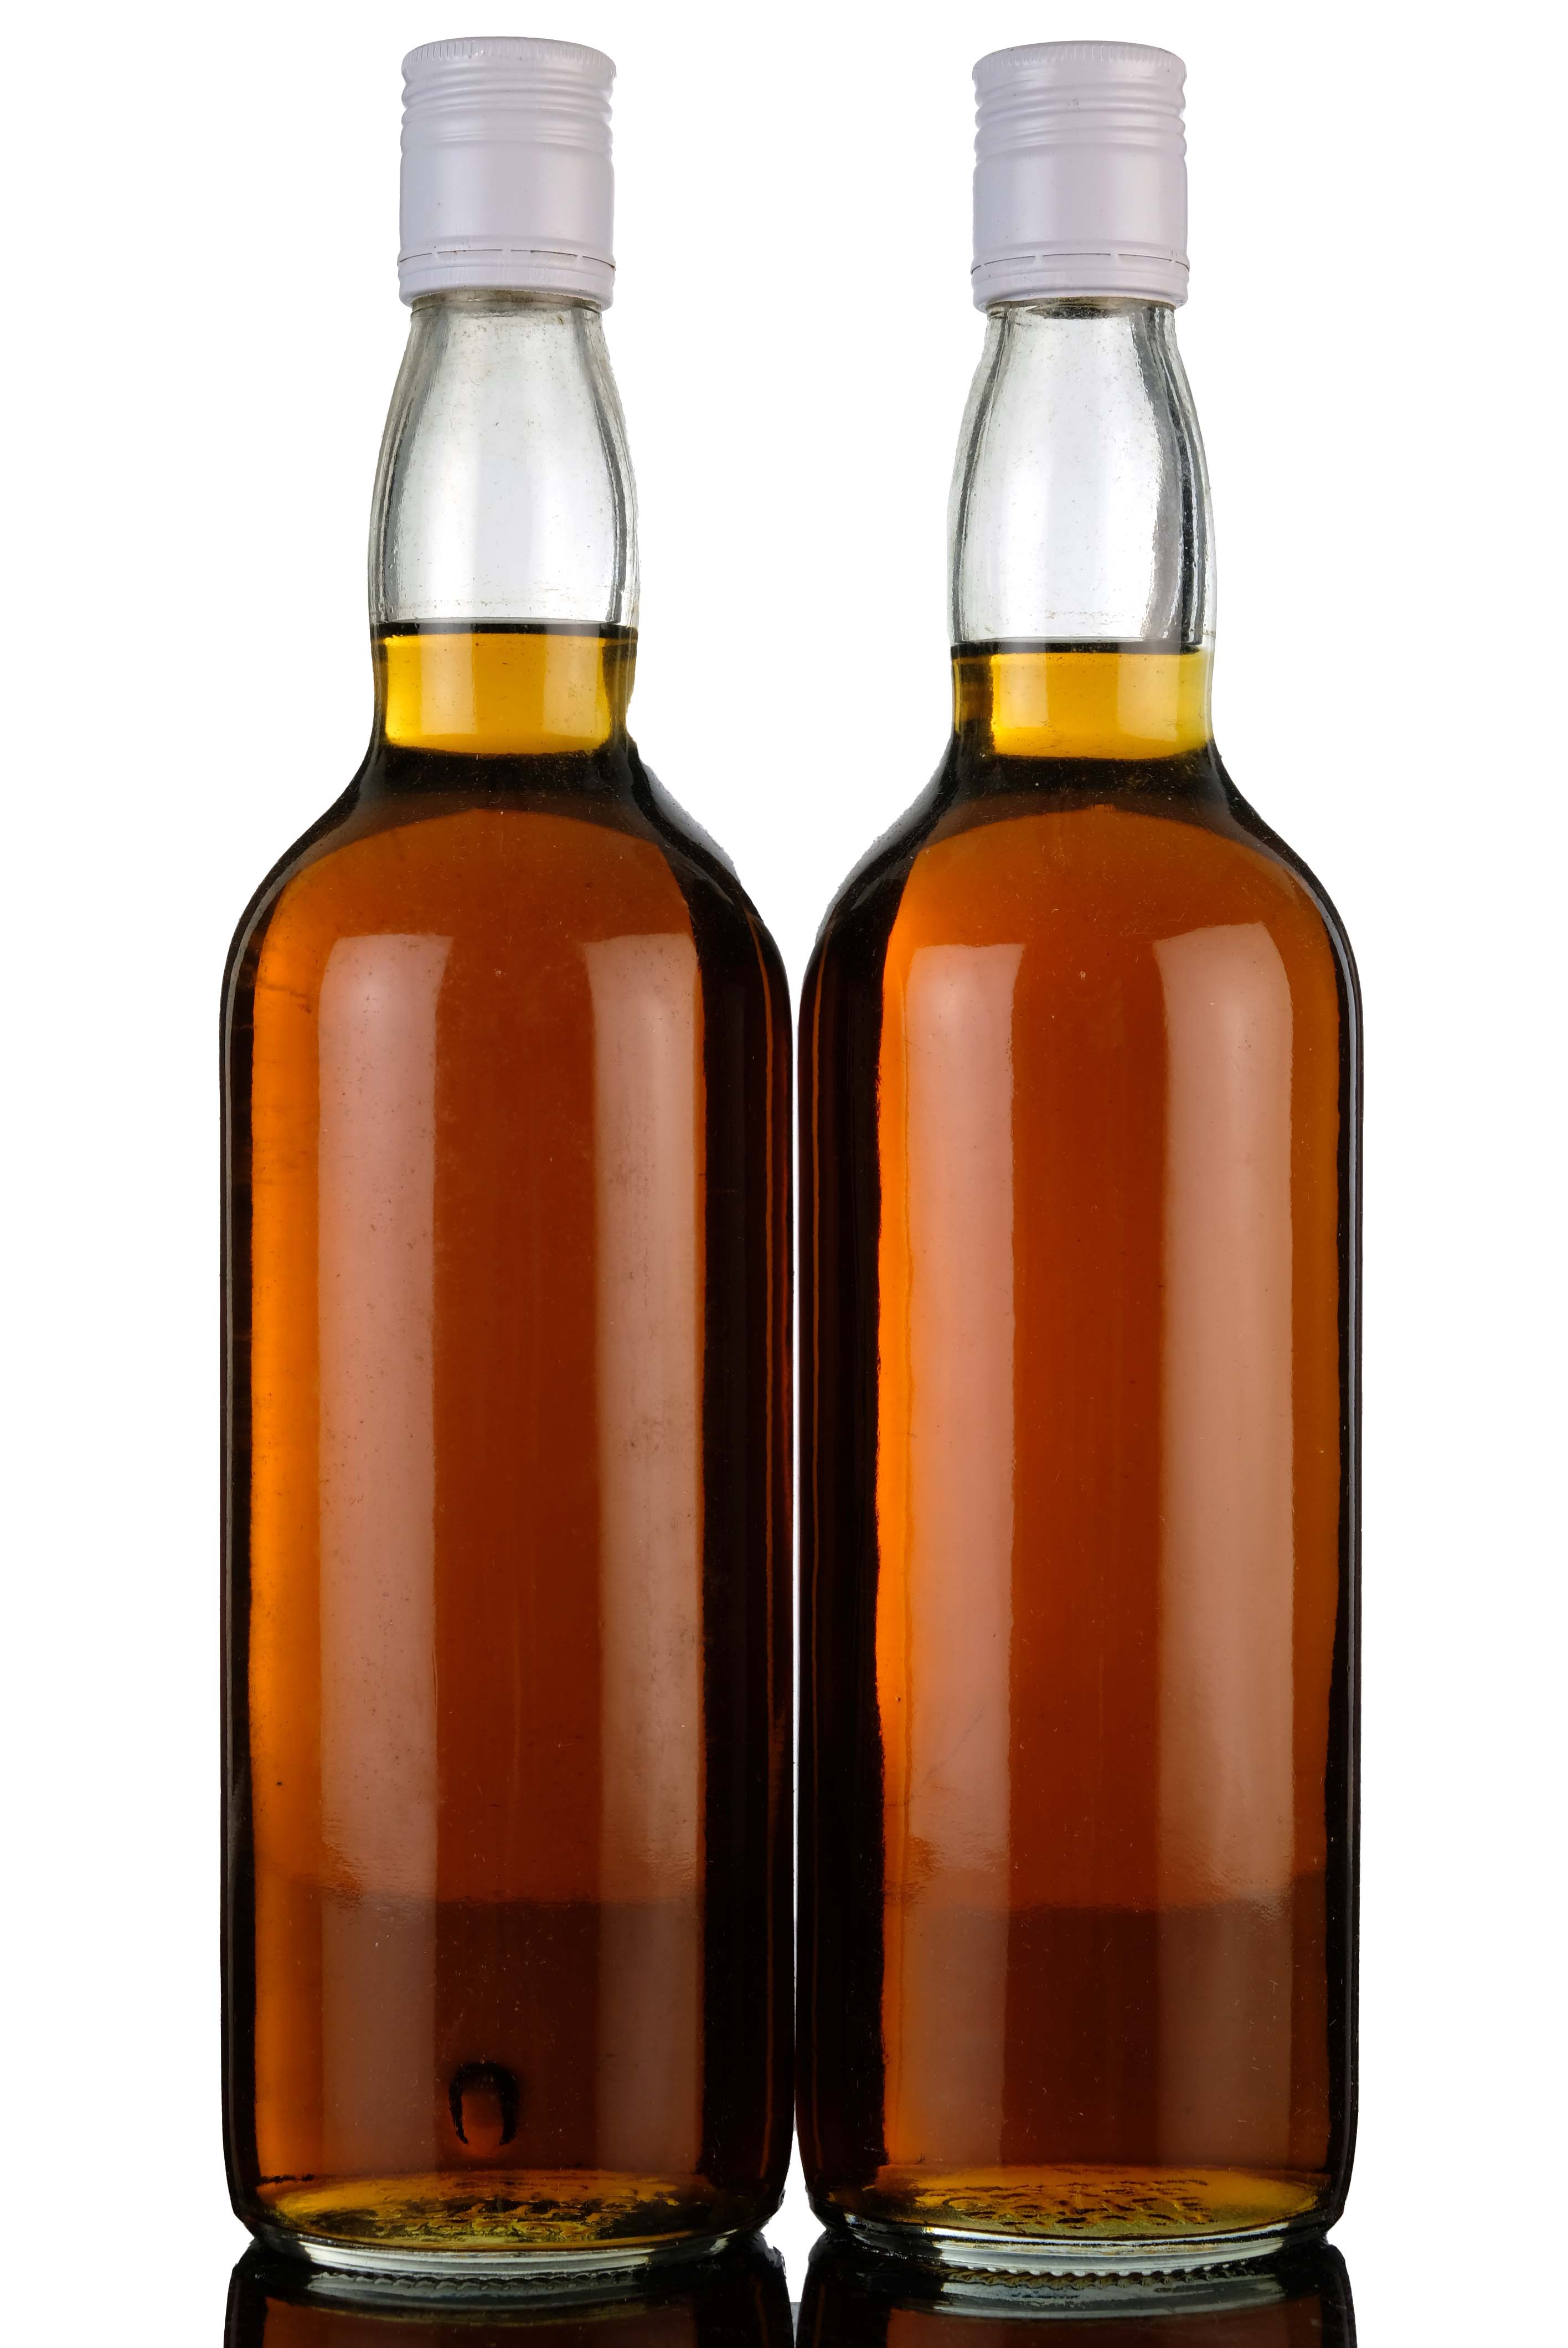 2 x Cragganmore (Craganmore) 1966-1981 - 15 Year Old - Private Bottling